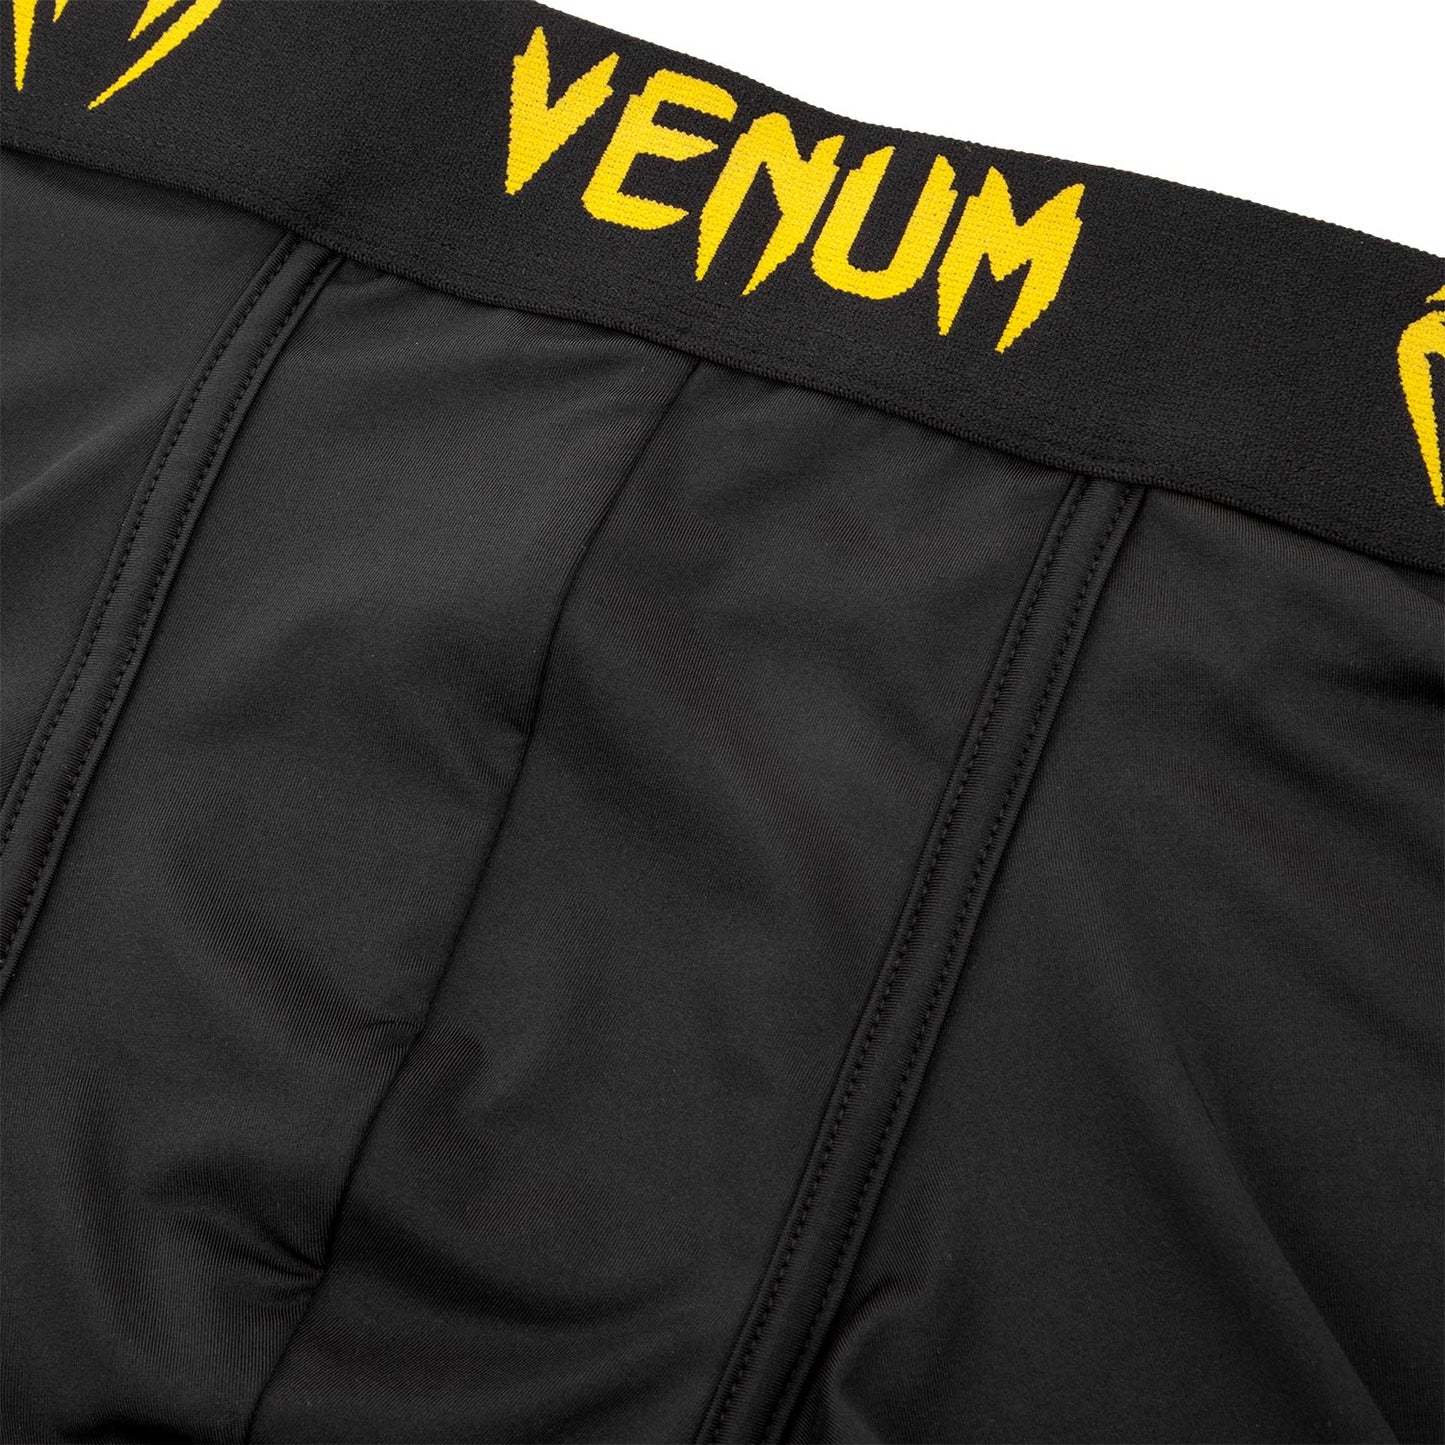 Venum Classic Boxer - Black/Yellow